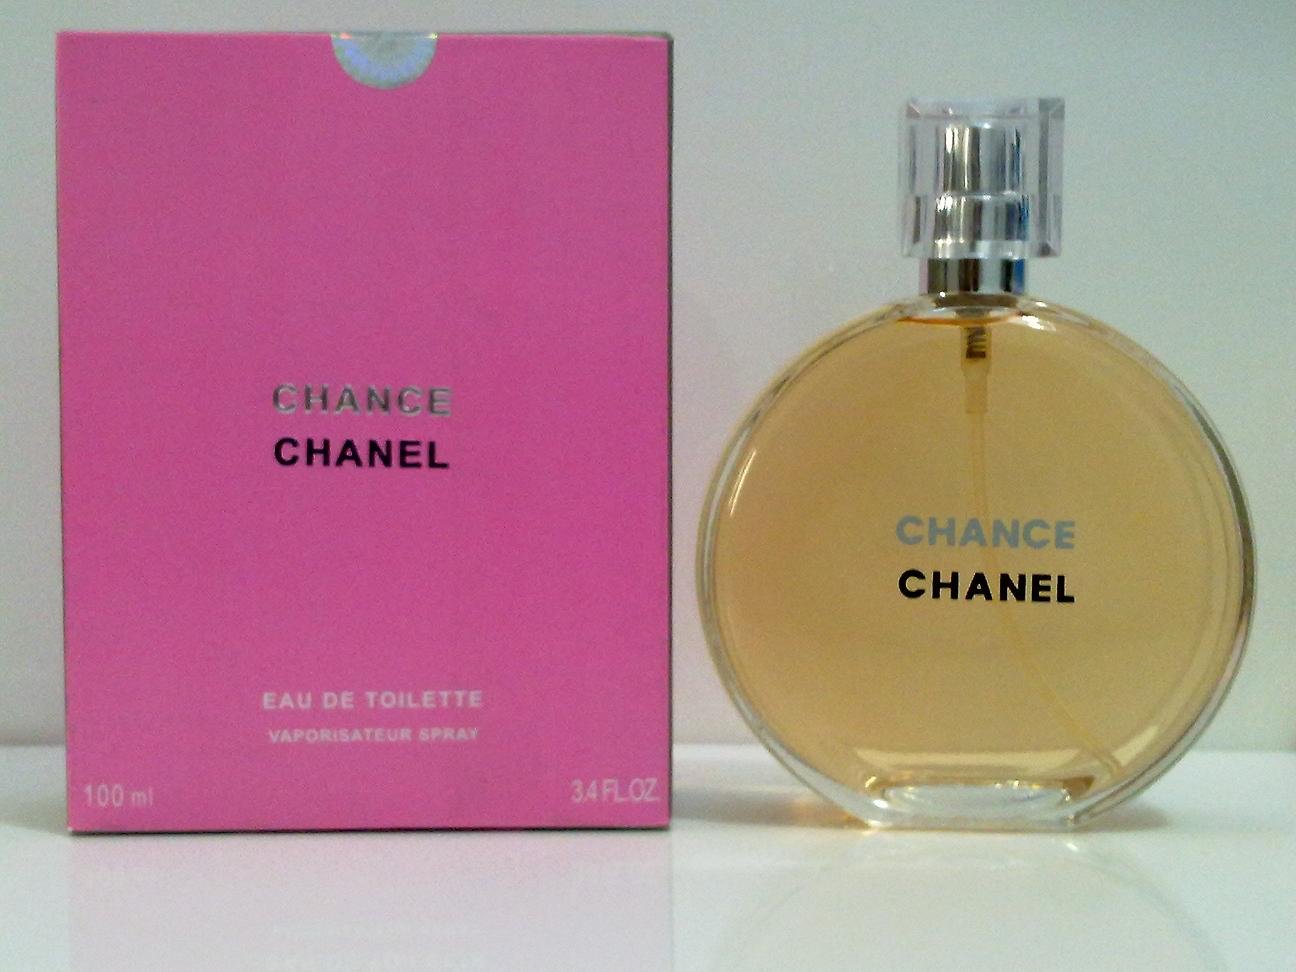 Chanel chance 100ml